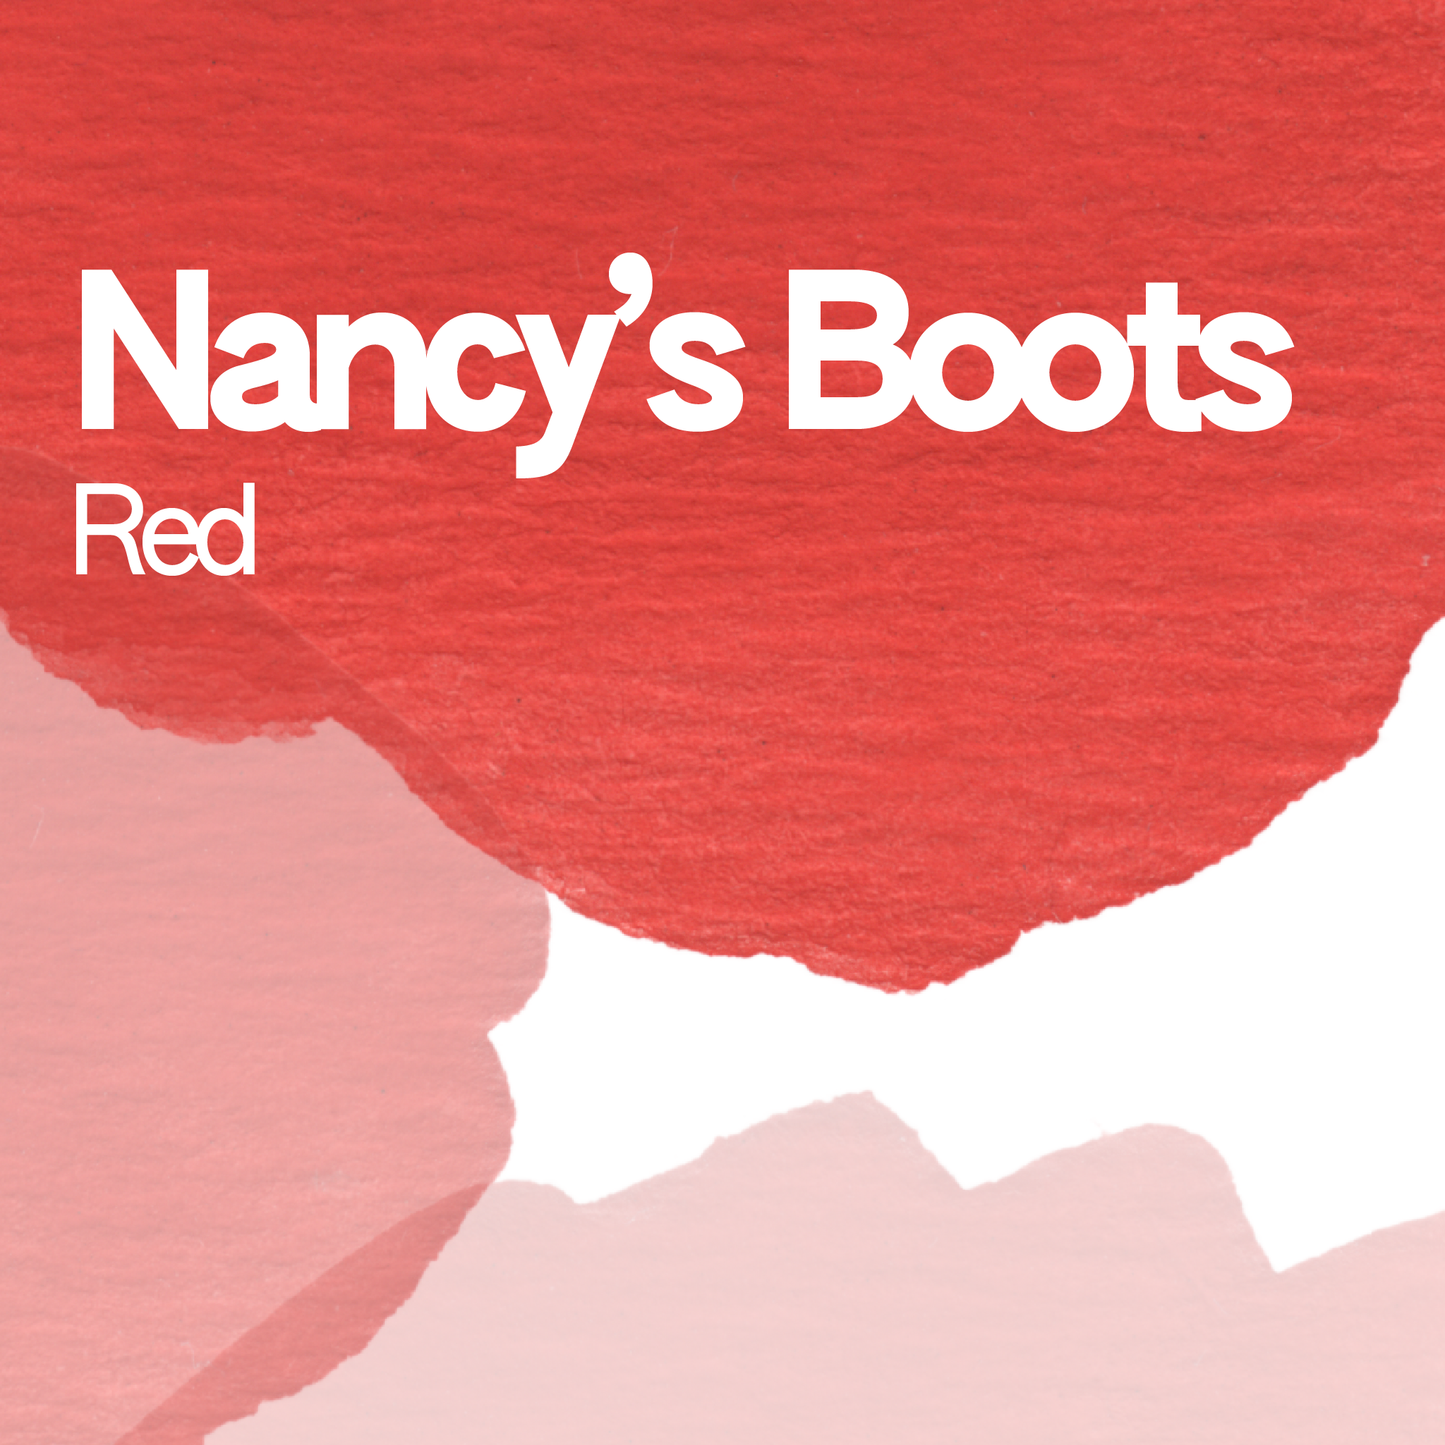 Nancy’s Boots Red aquarelle artisanale vegan 